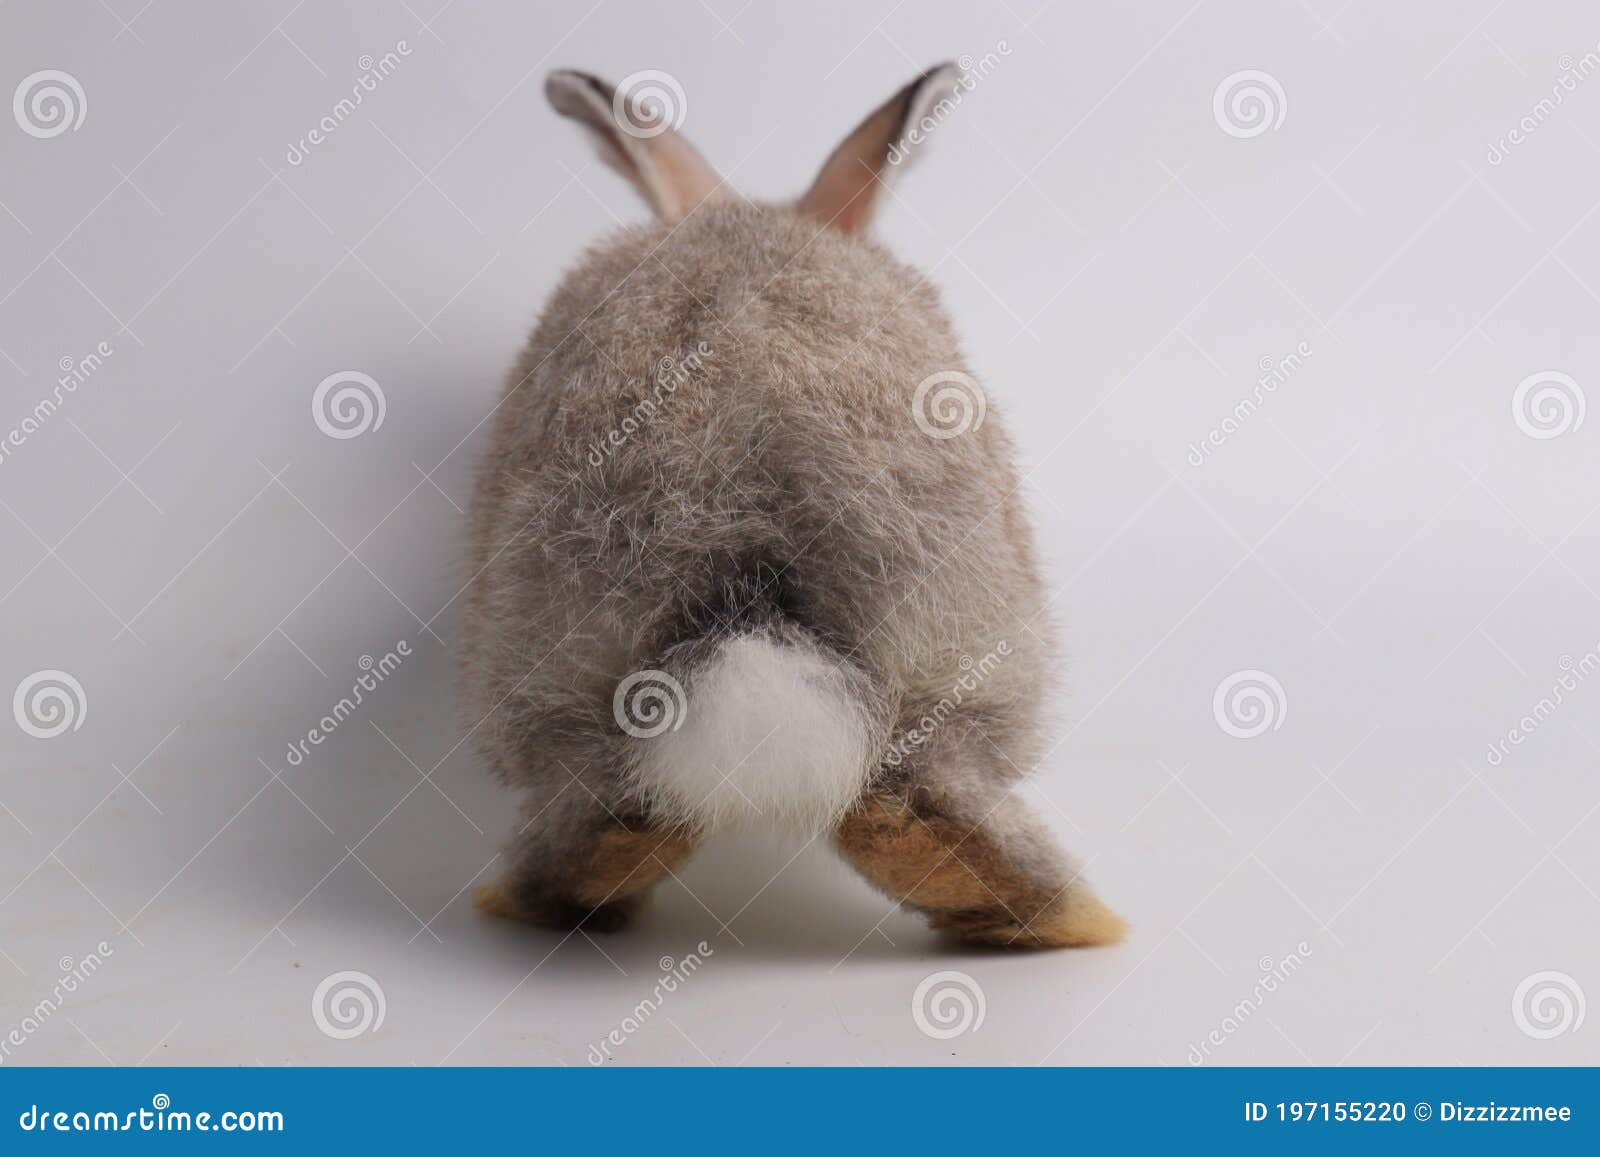 Ass rice bunny RiceBunny's Profile